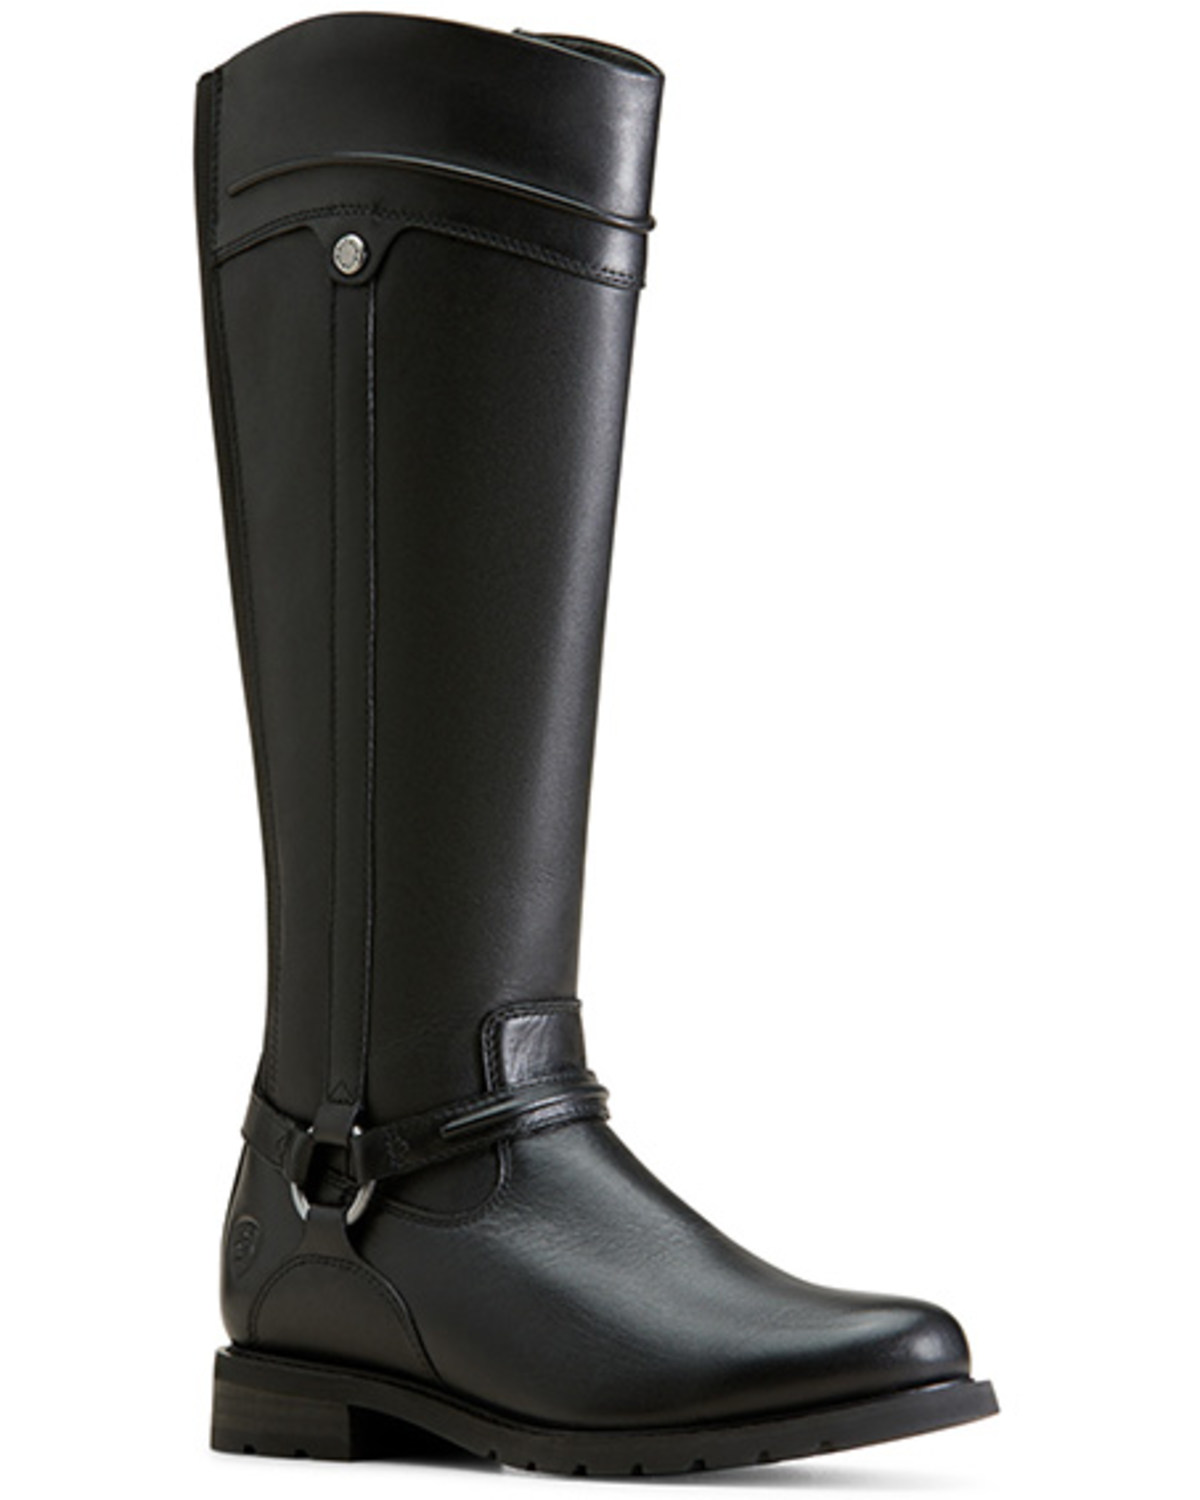 Ariat Women's Scarlett Waterproof Boots - Round Toe